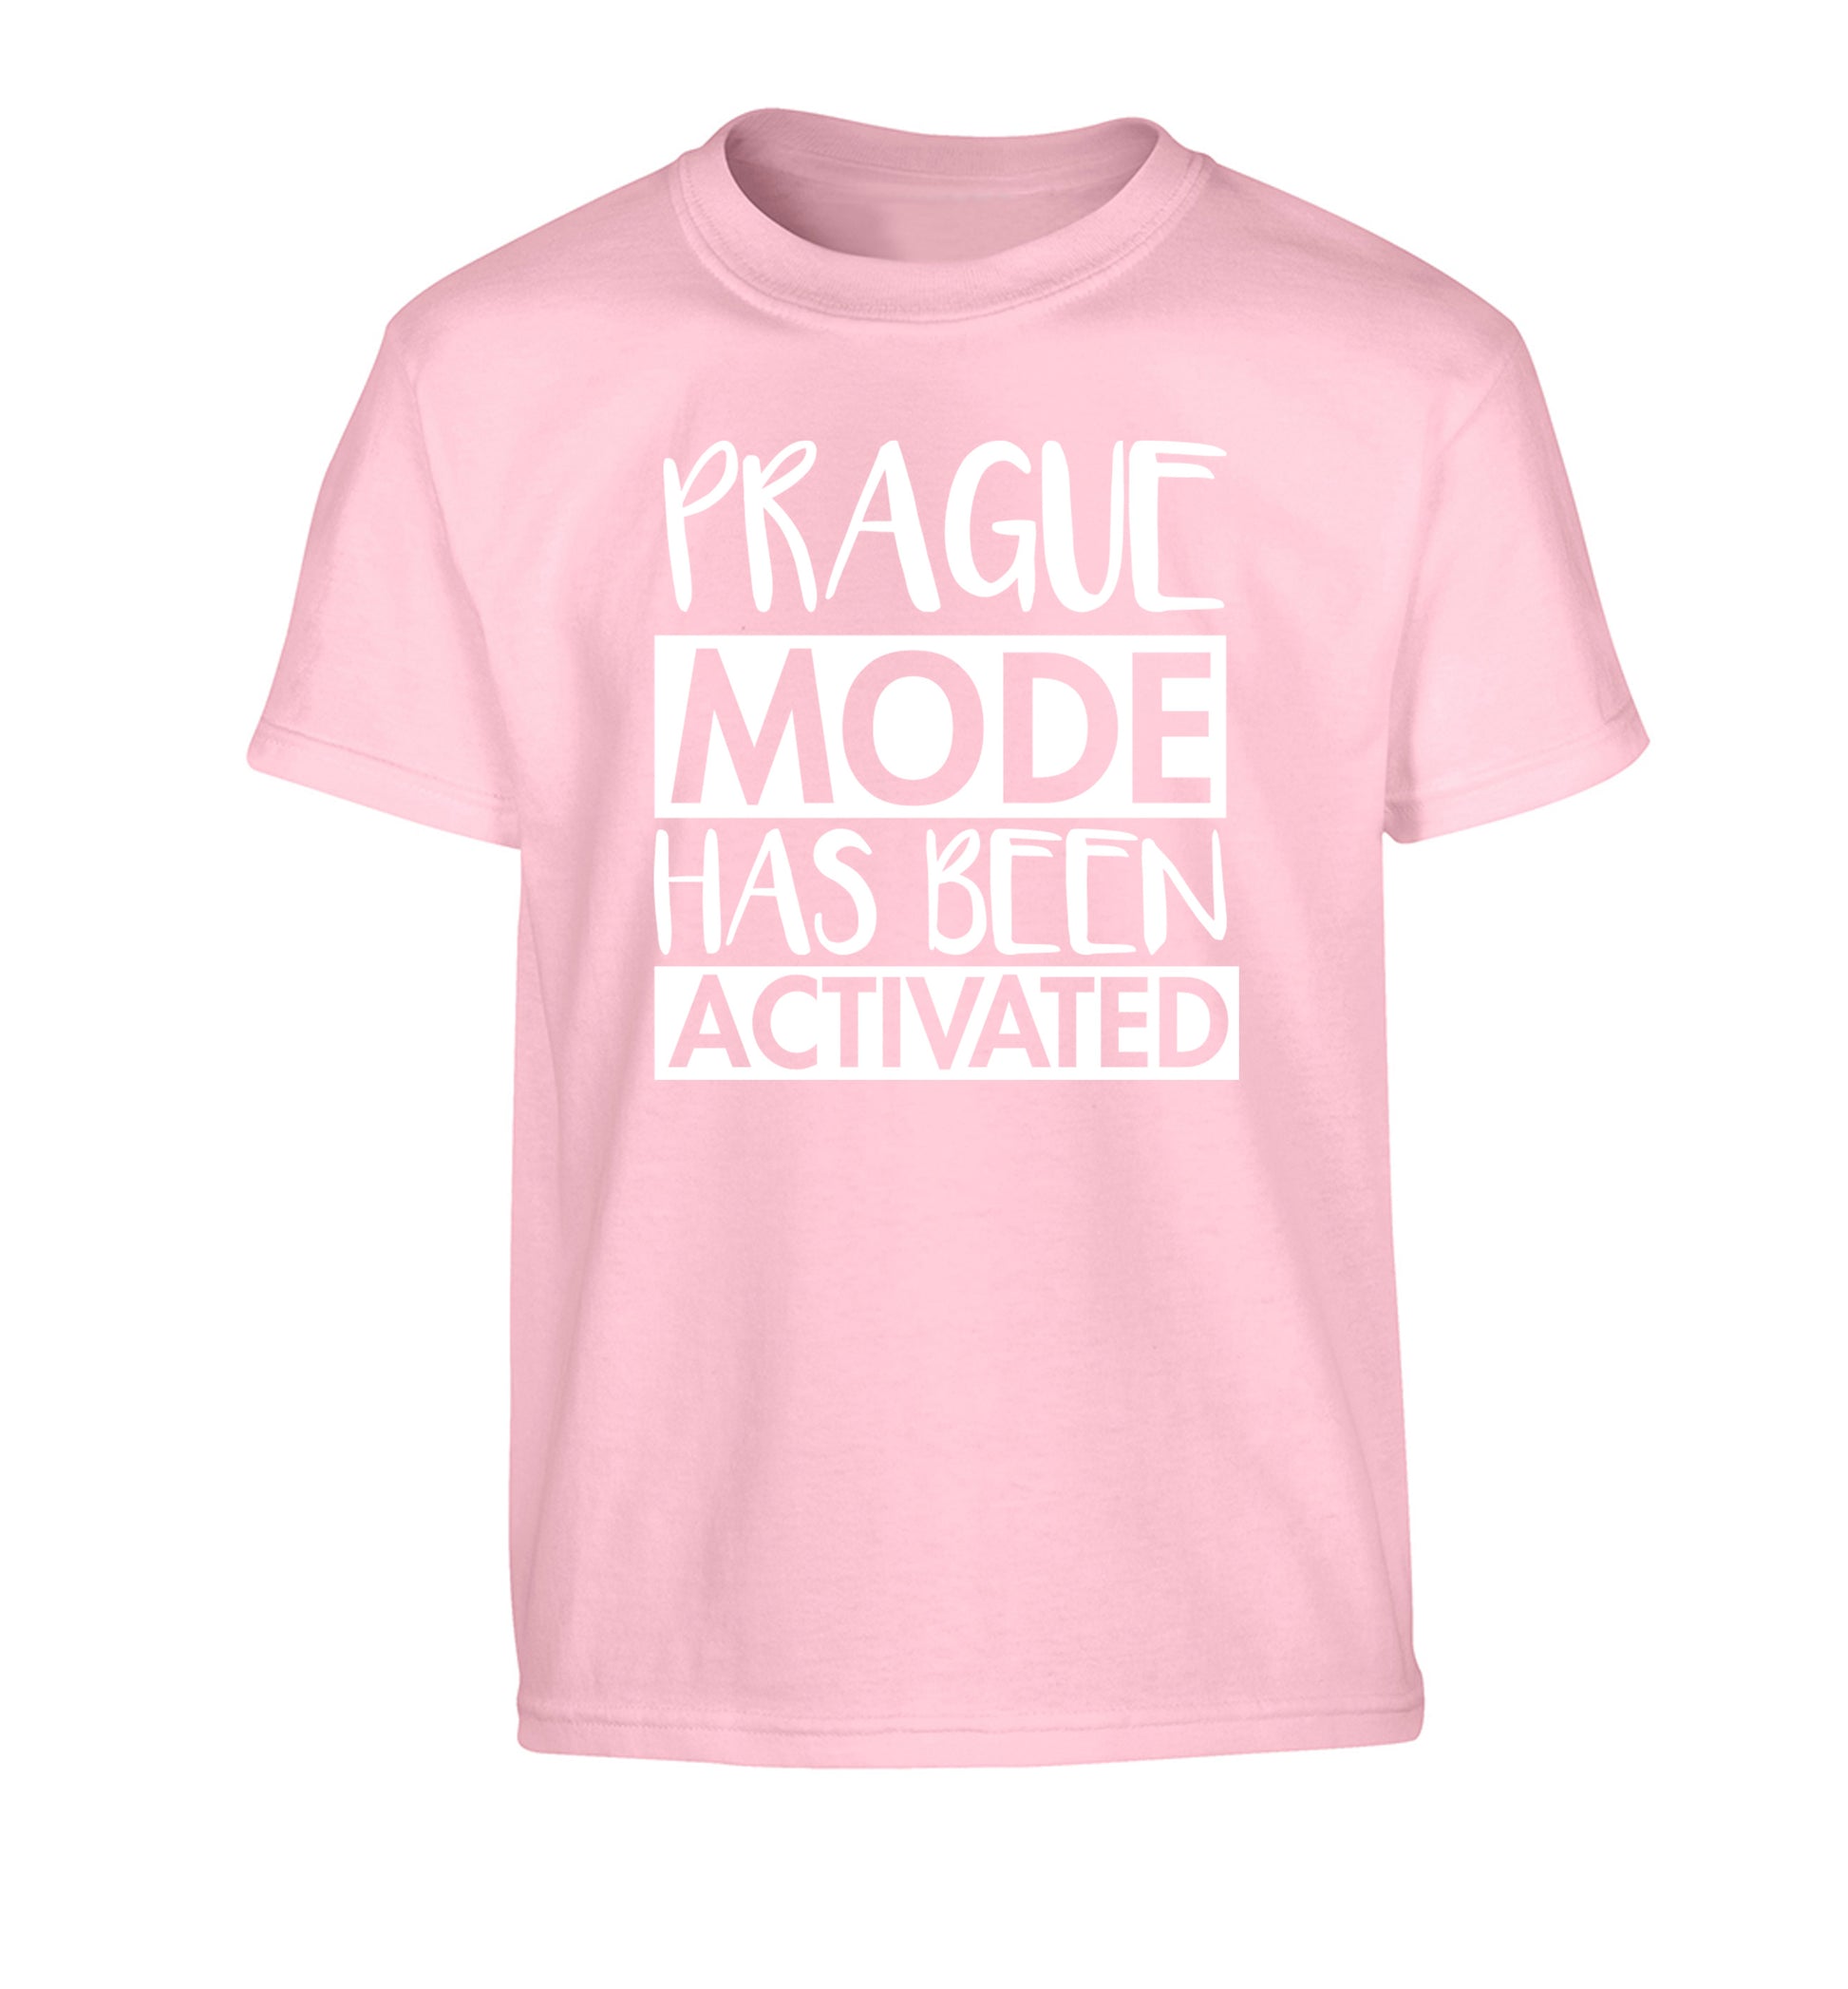 Prague mode has been activated Children's light pink Tshirt 12-13 Years